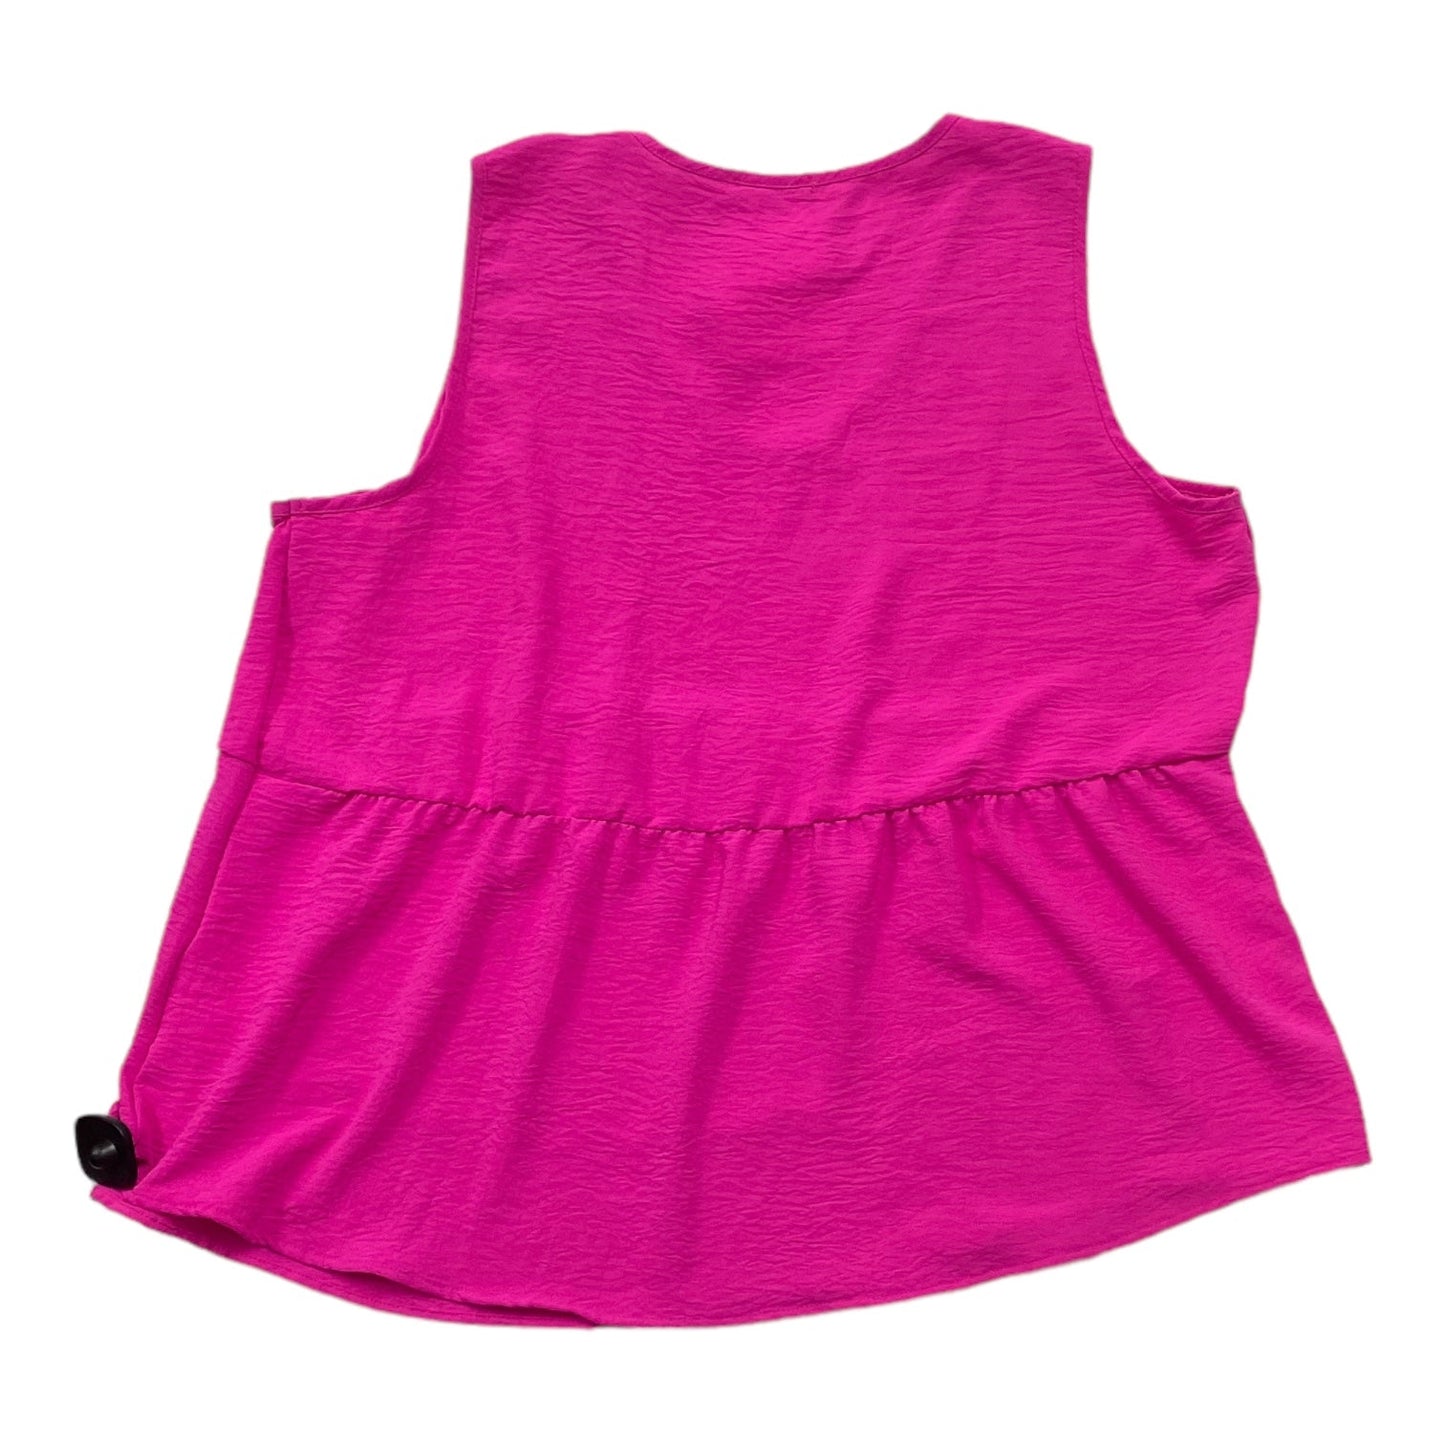 Pink Top Sleeveless Cotton Bleu, Size 1x